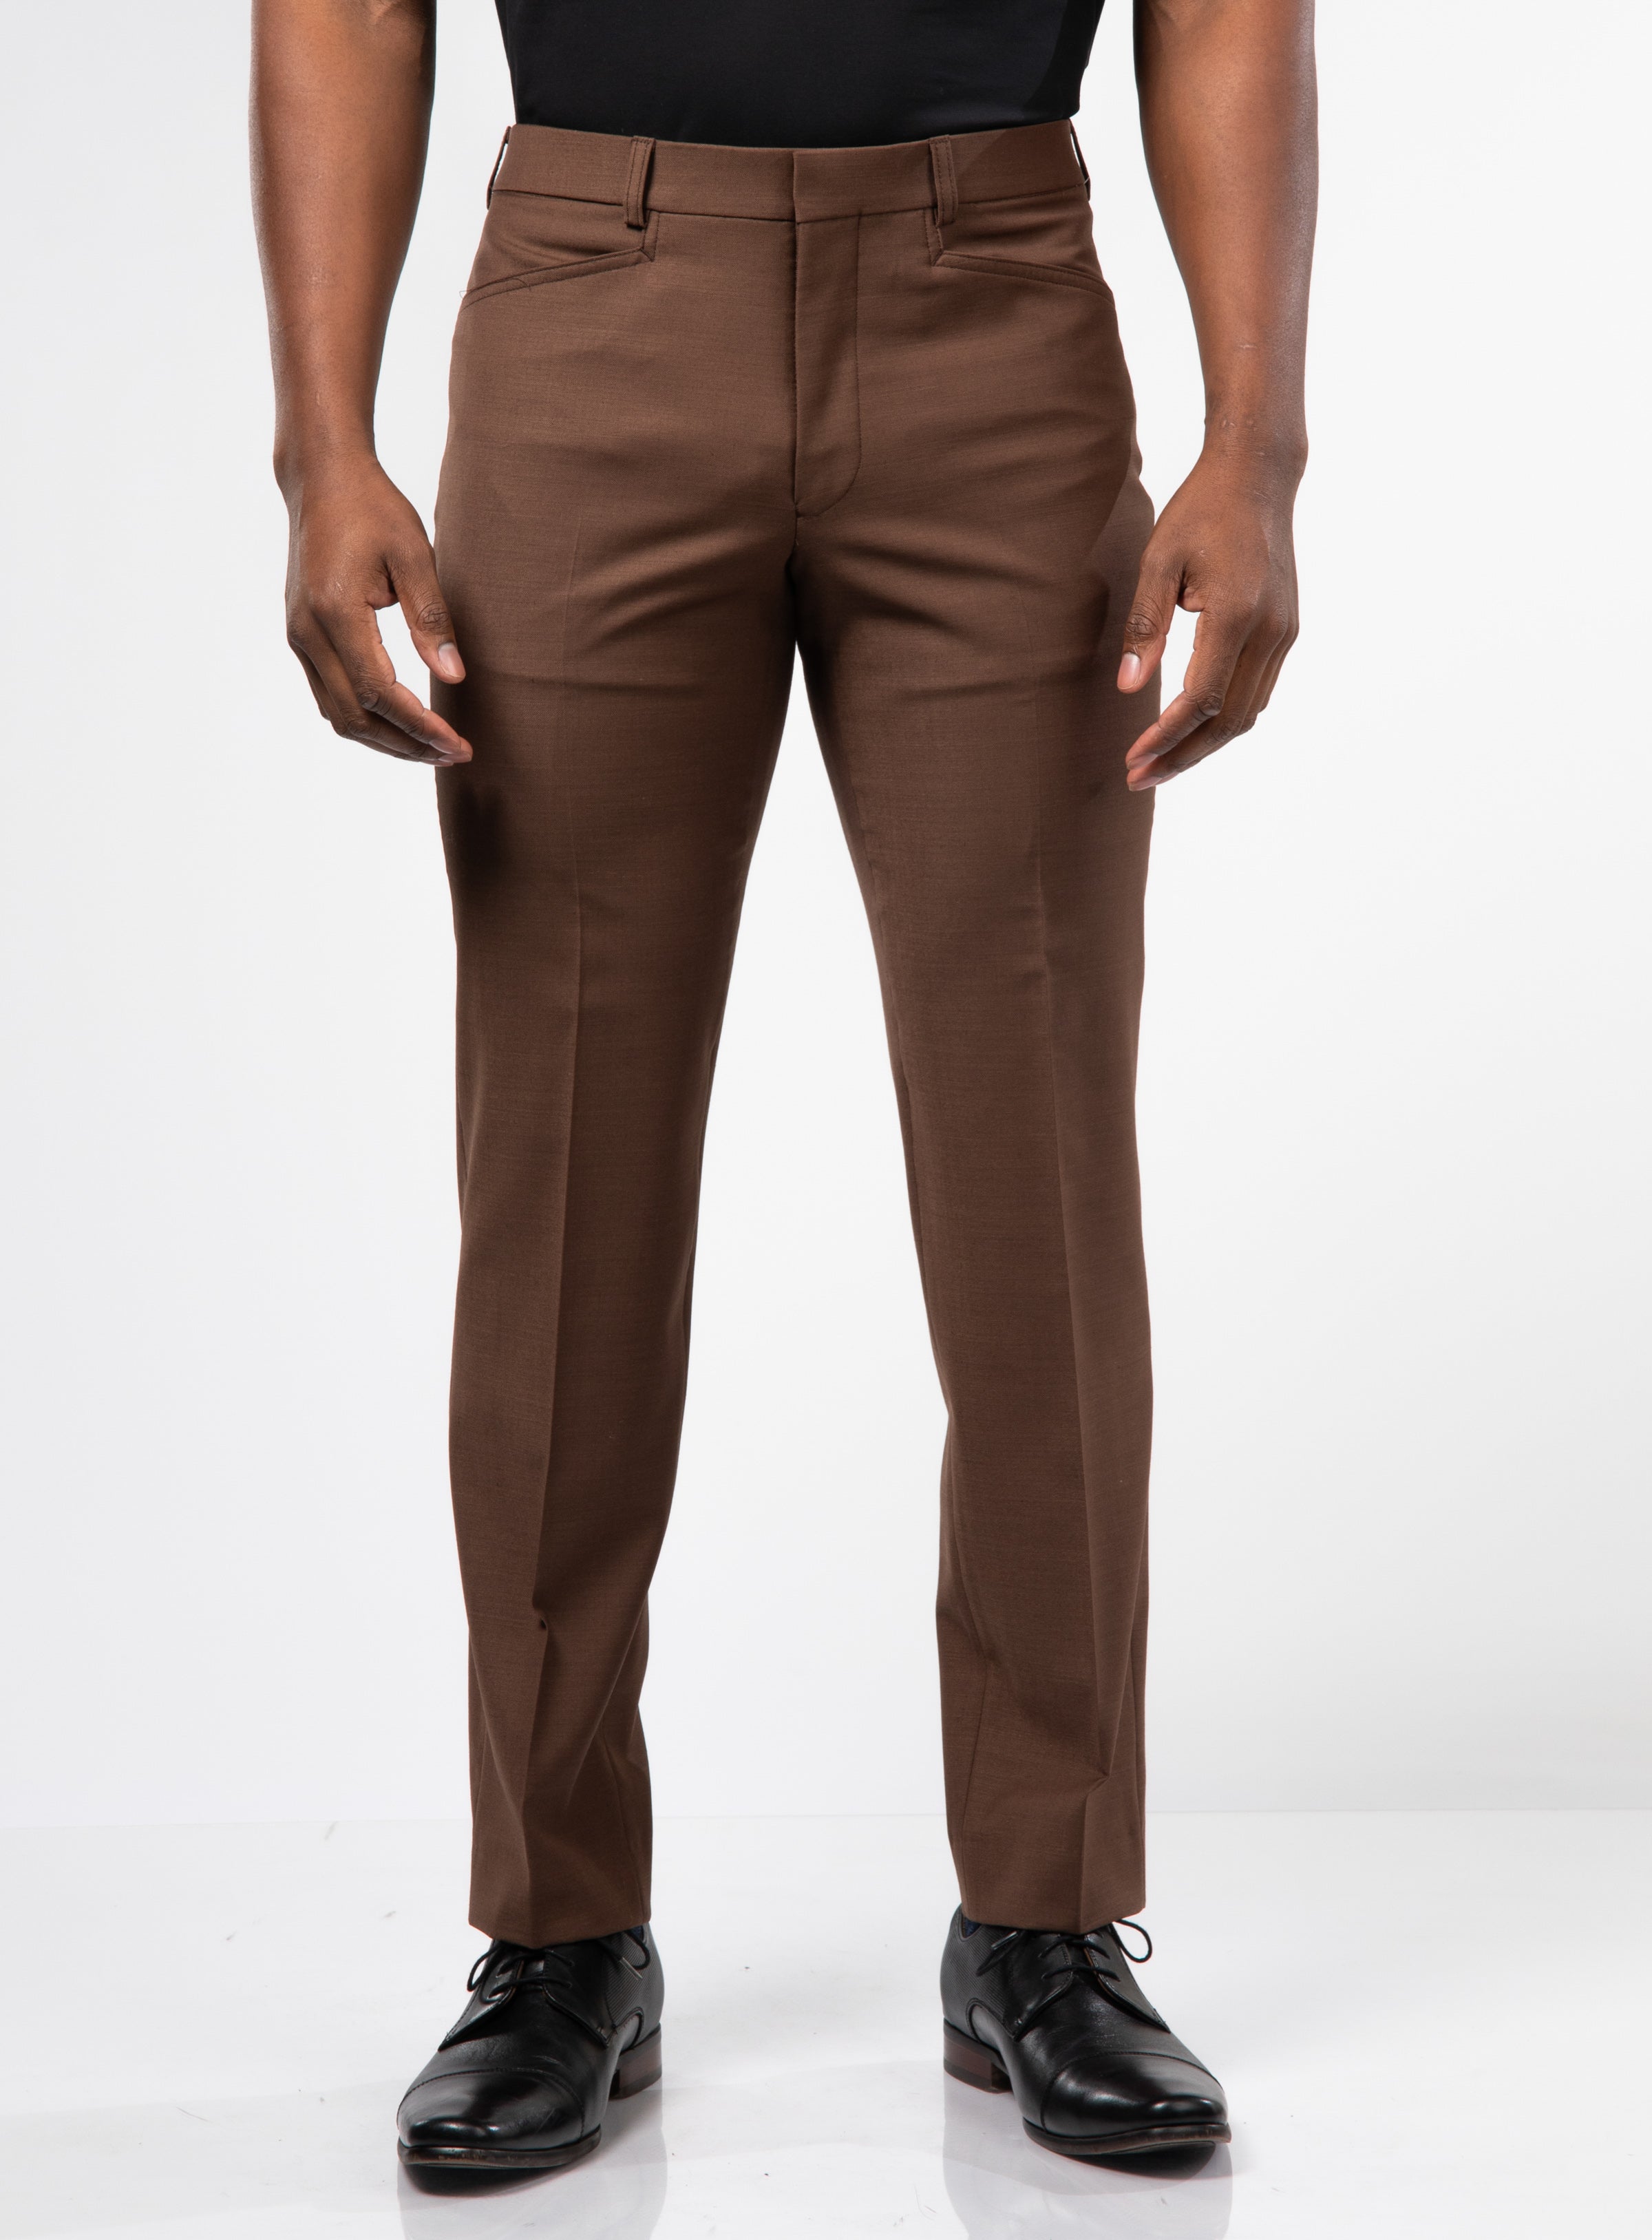 Advbridge Brown/Black Suit Pants Men Fashion Society Mens Dress